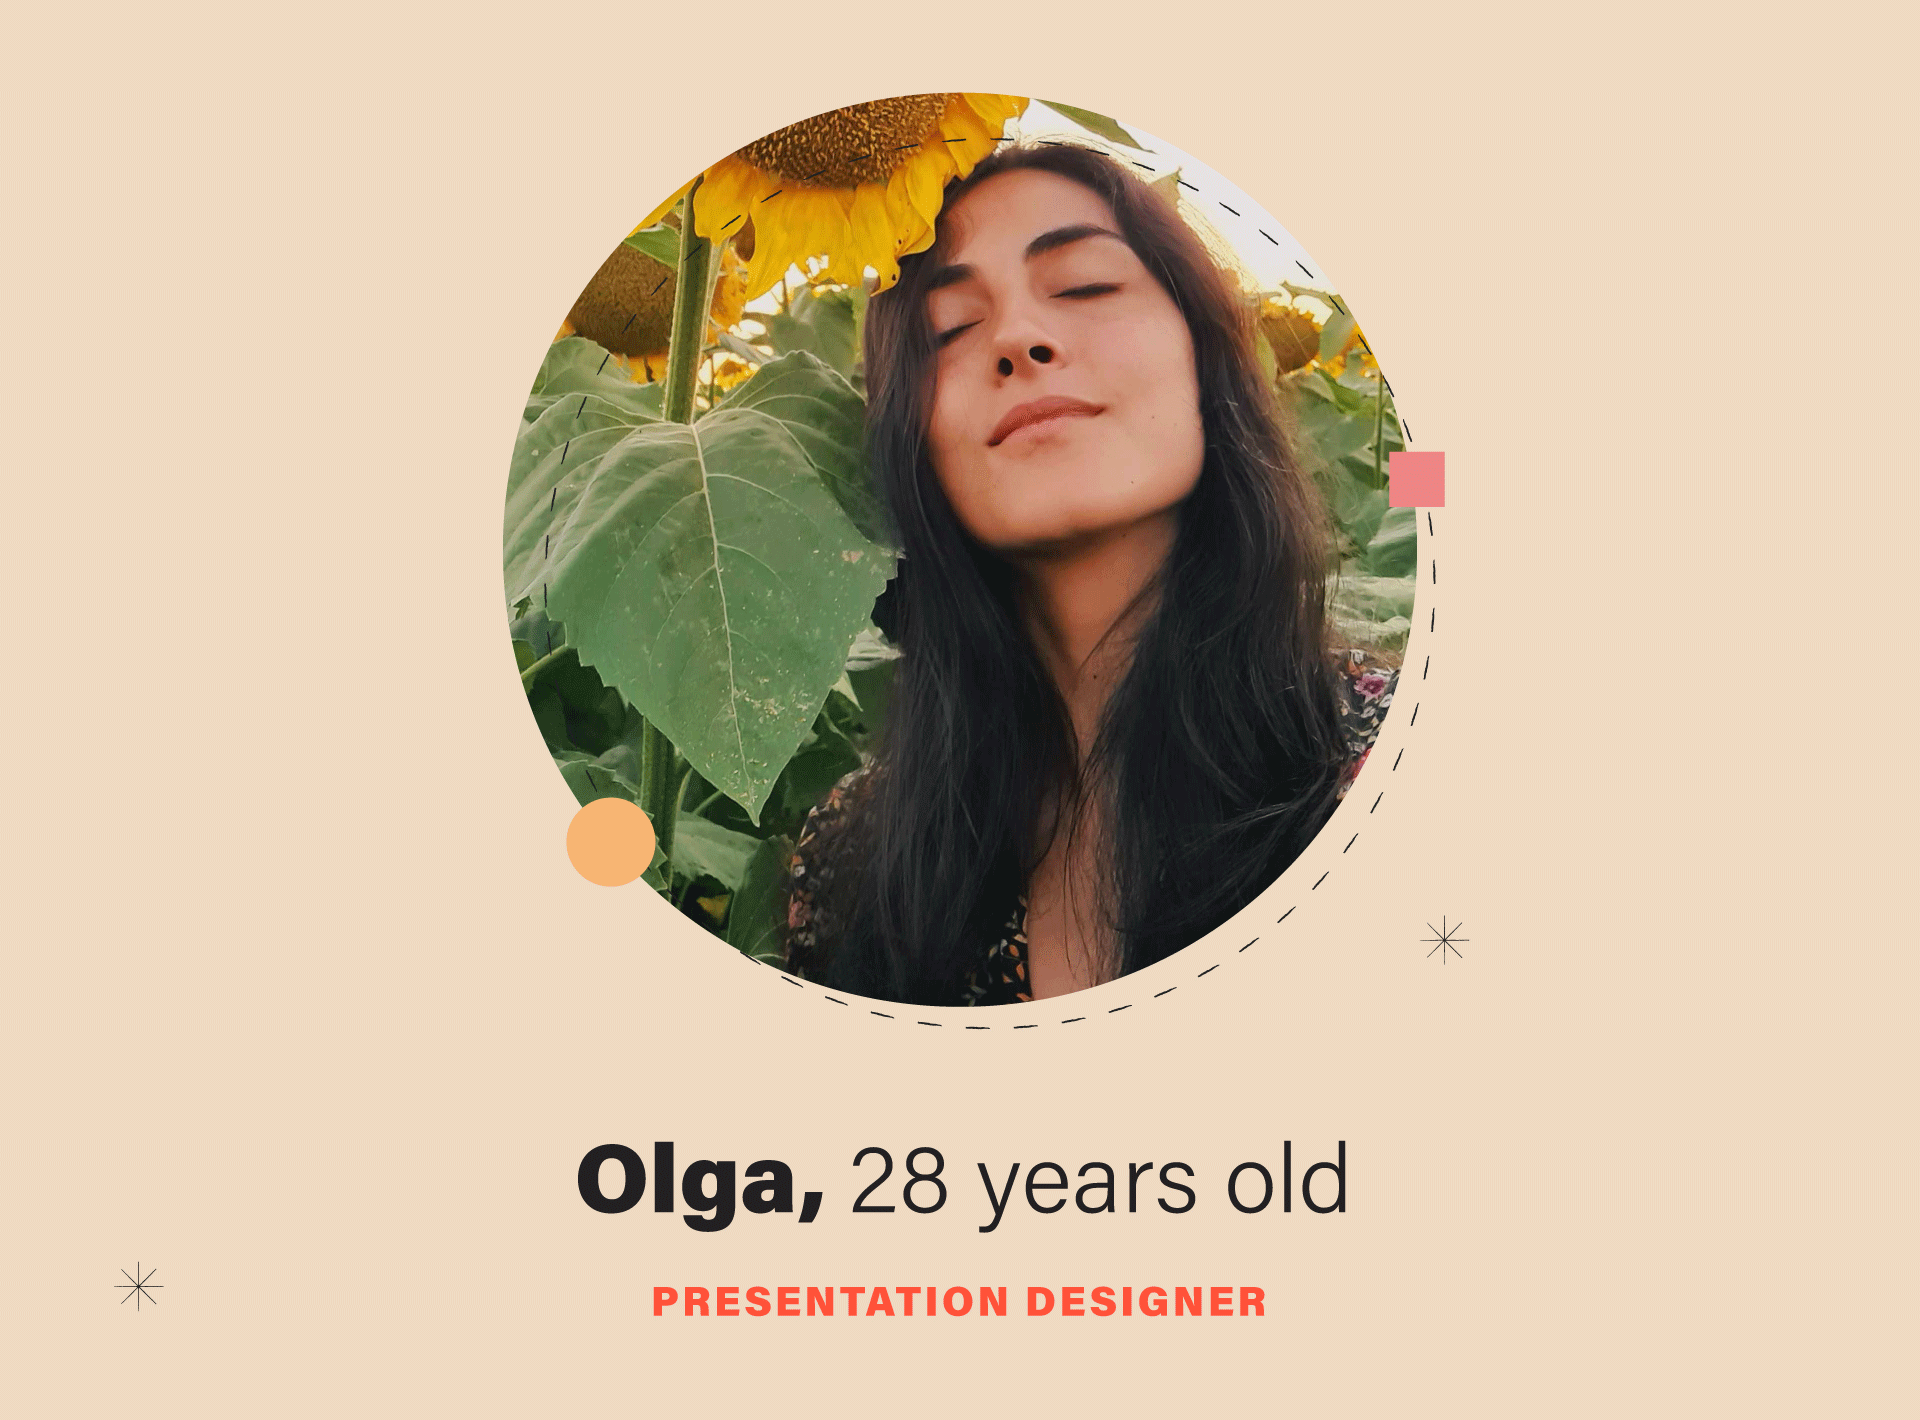 Olga, a presentation designer from Odesa